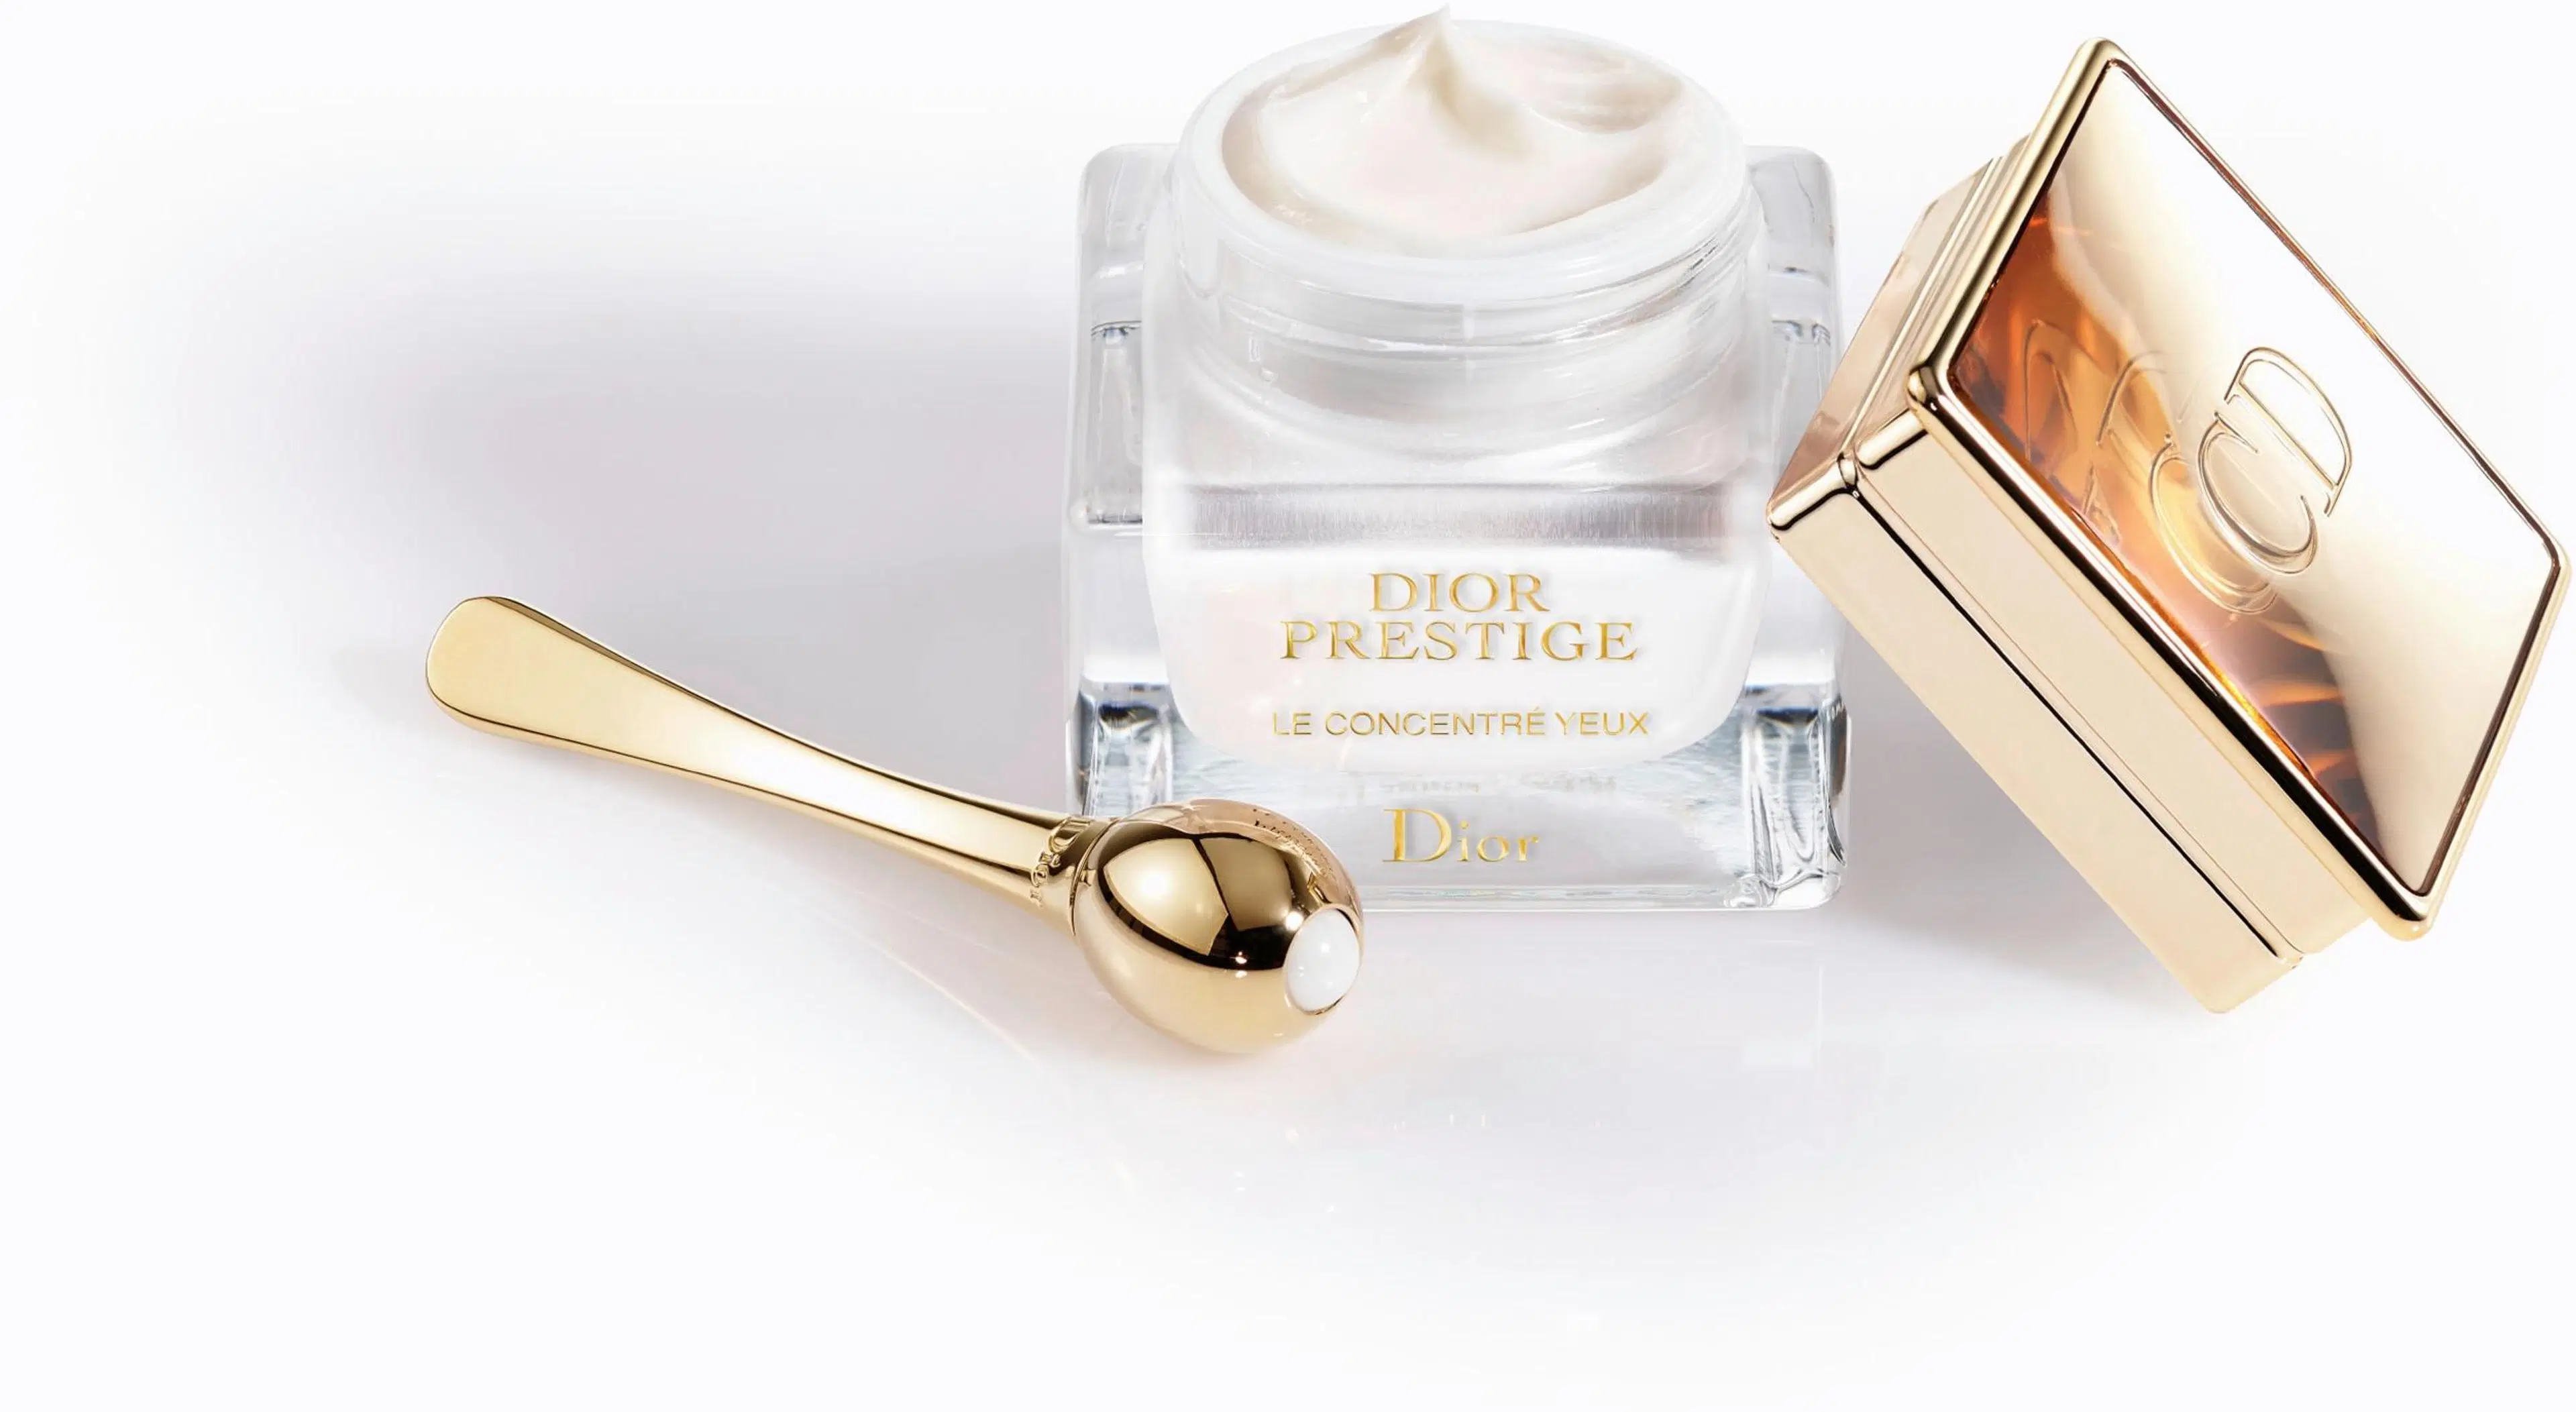 DIOR Prestige Le concentré Yeux Eye cream silmänympärysvoide 15 ml